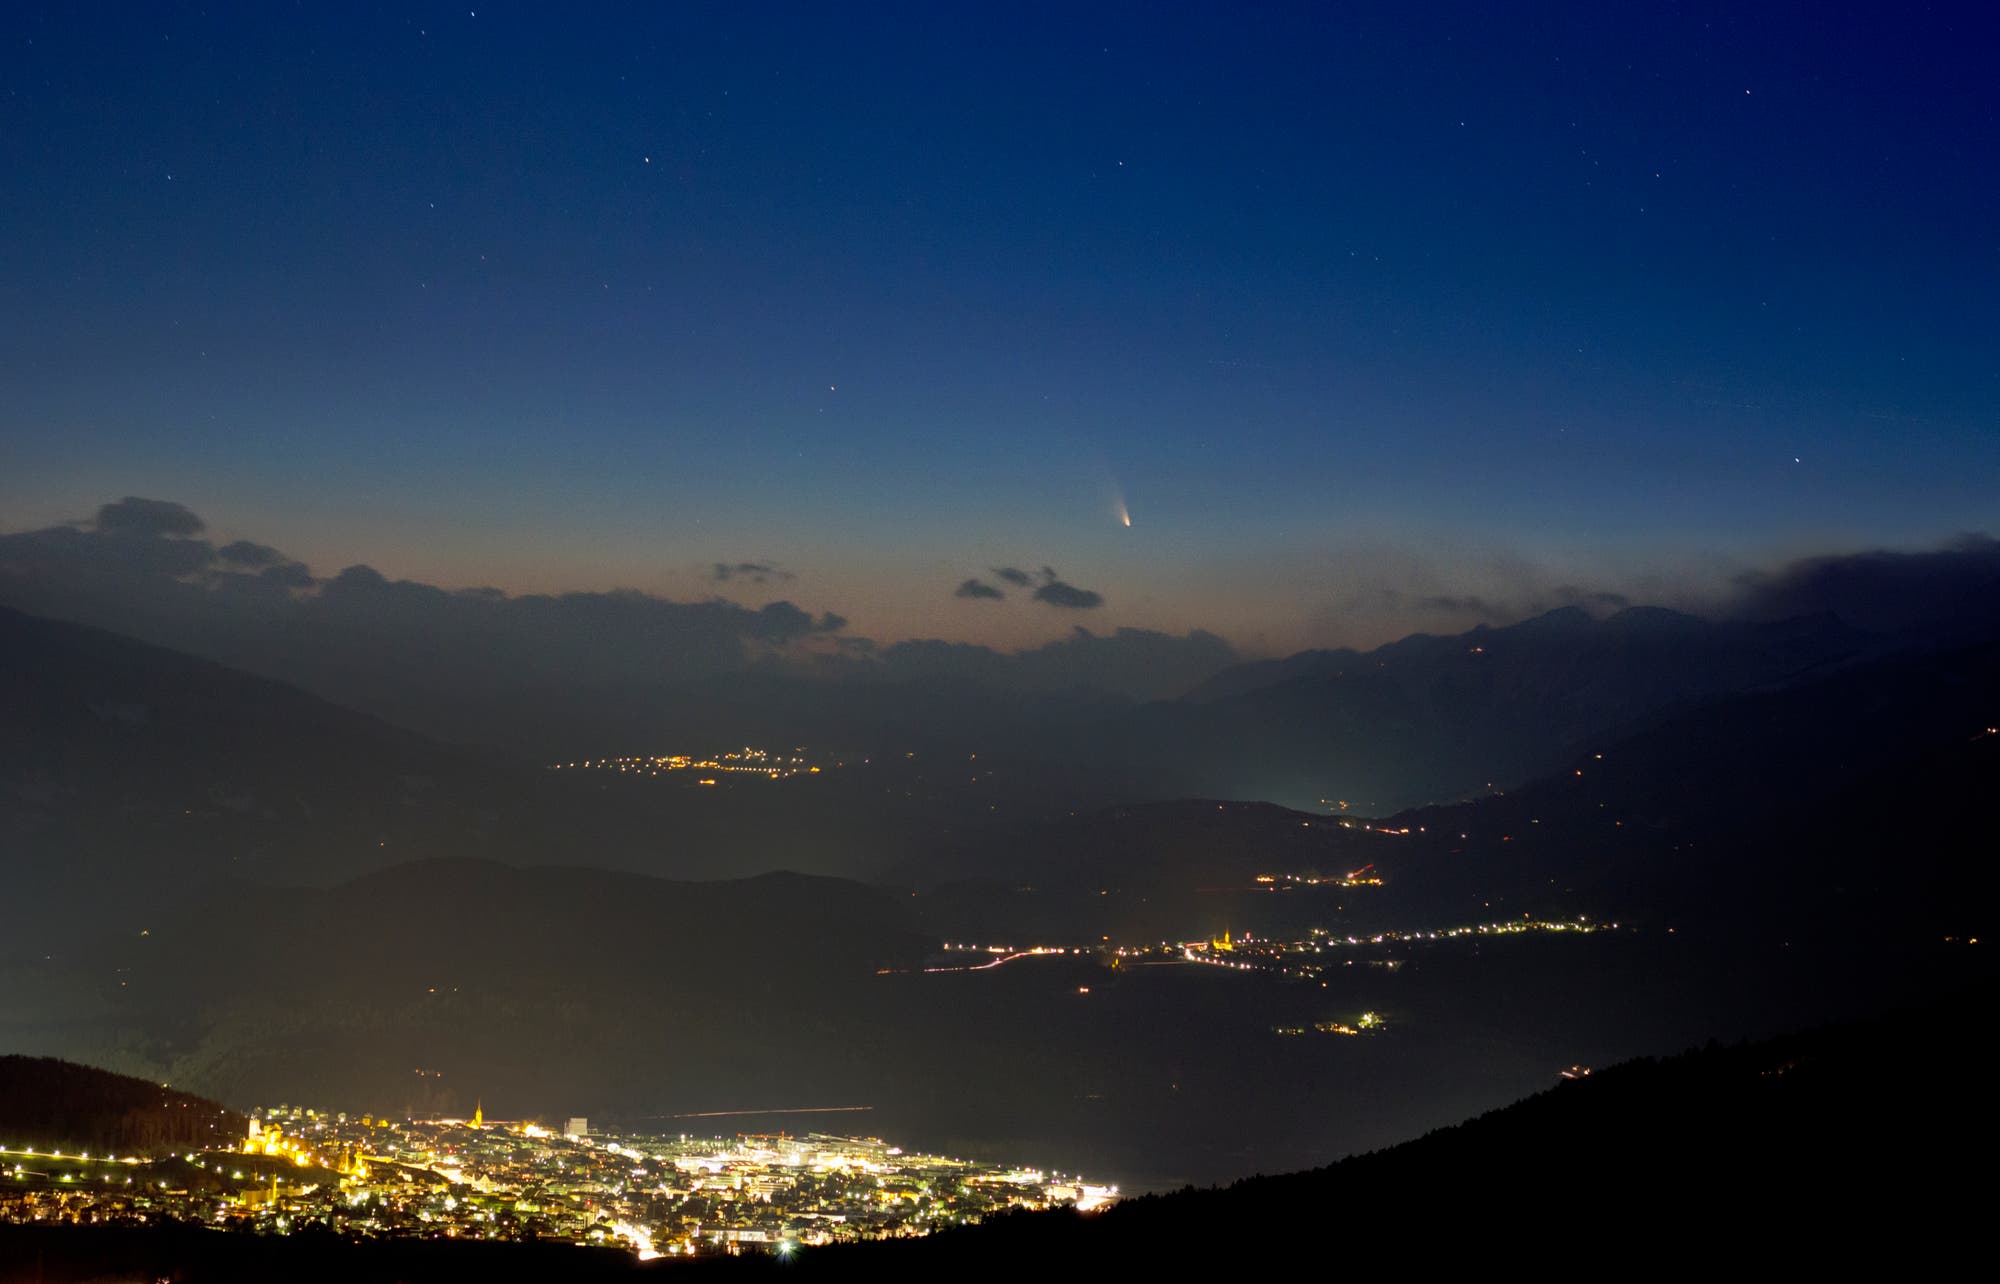 Komet PANSTARRS über Bruneck